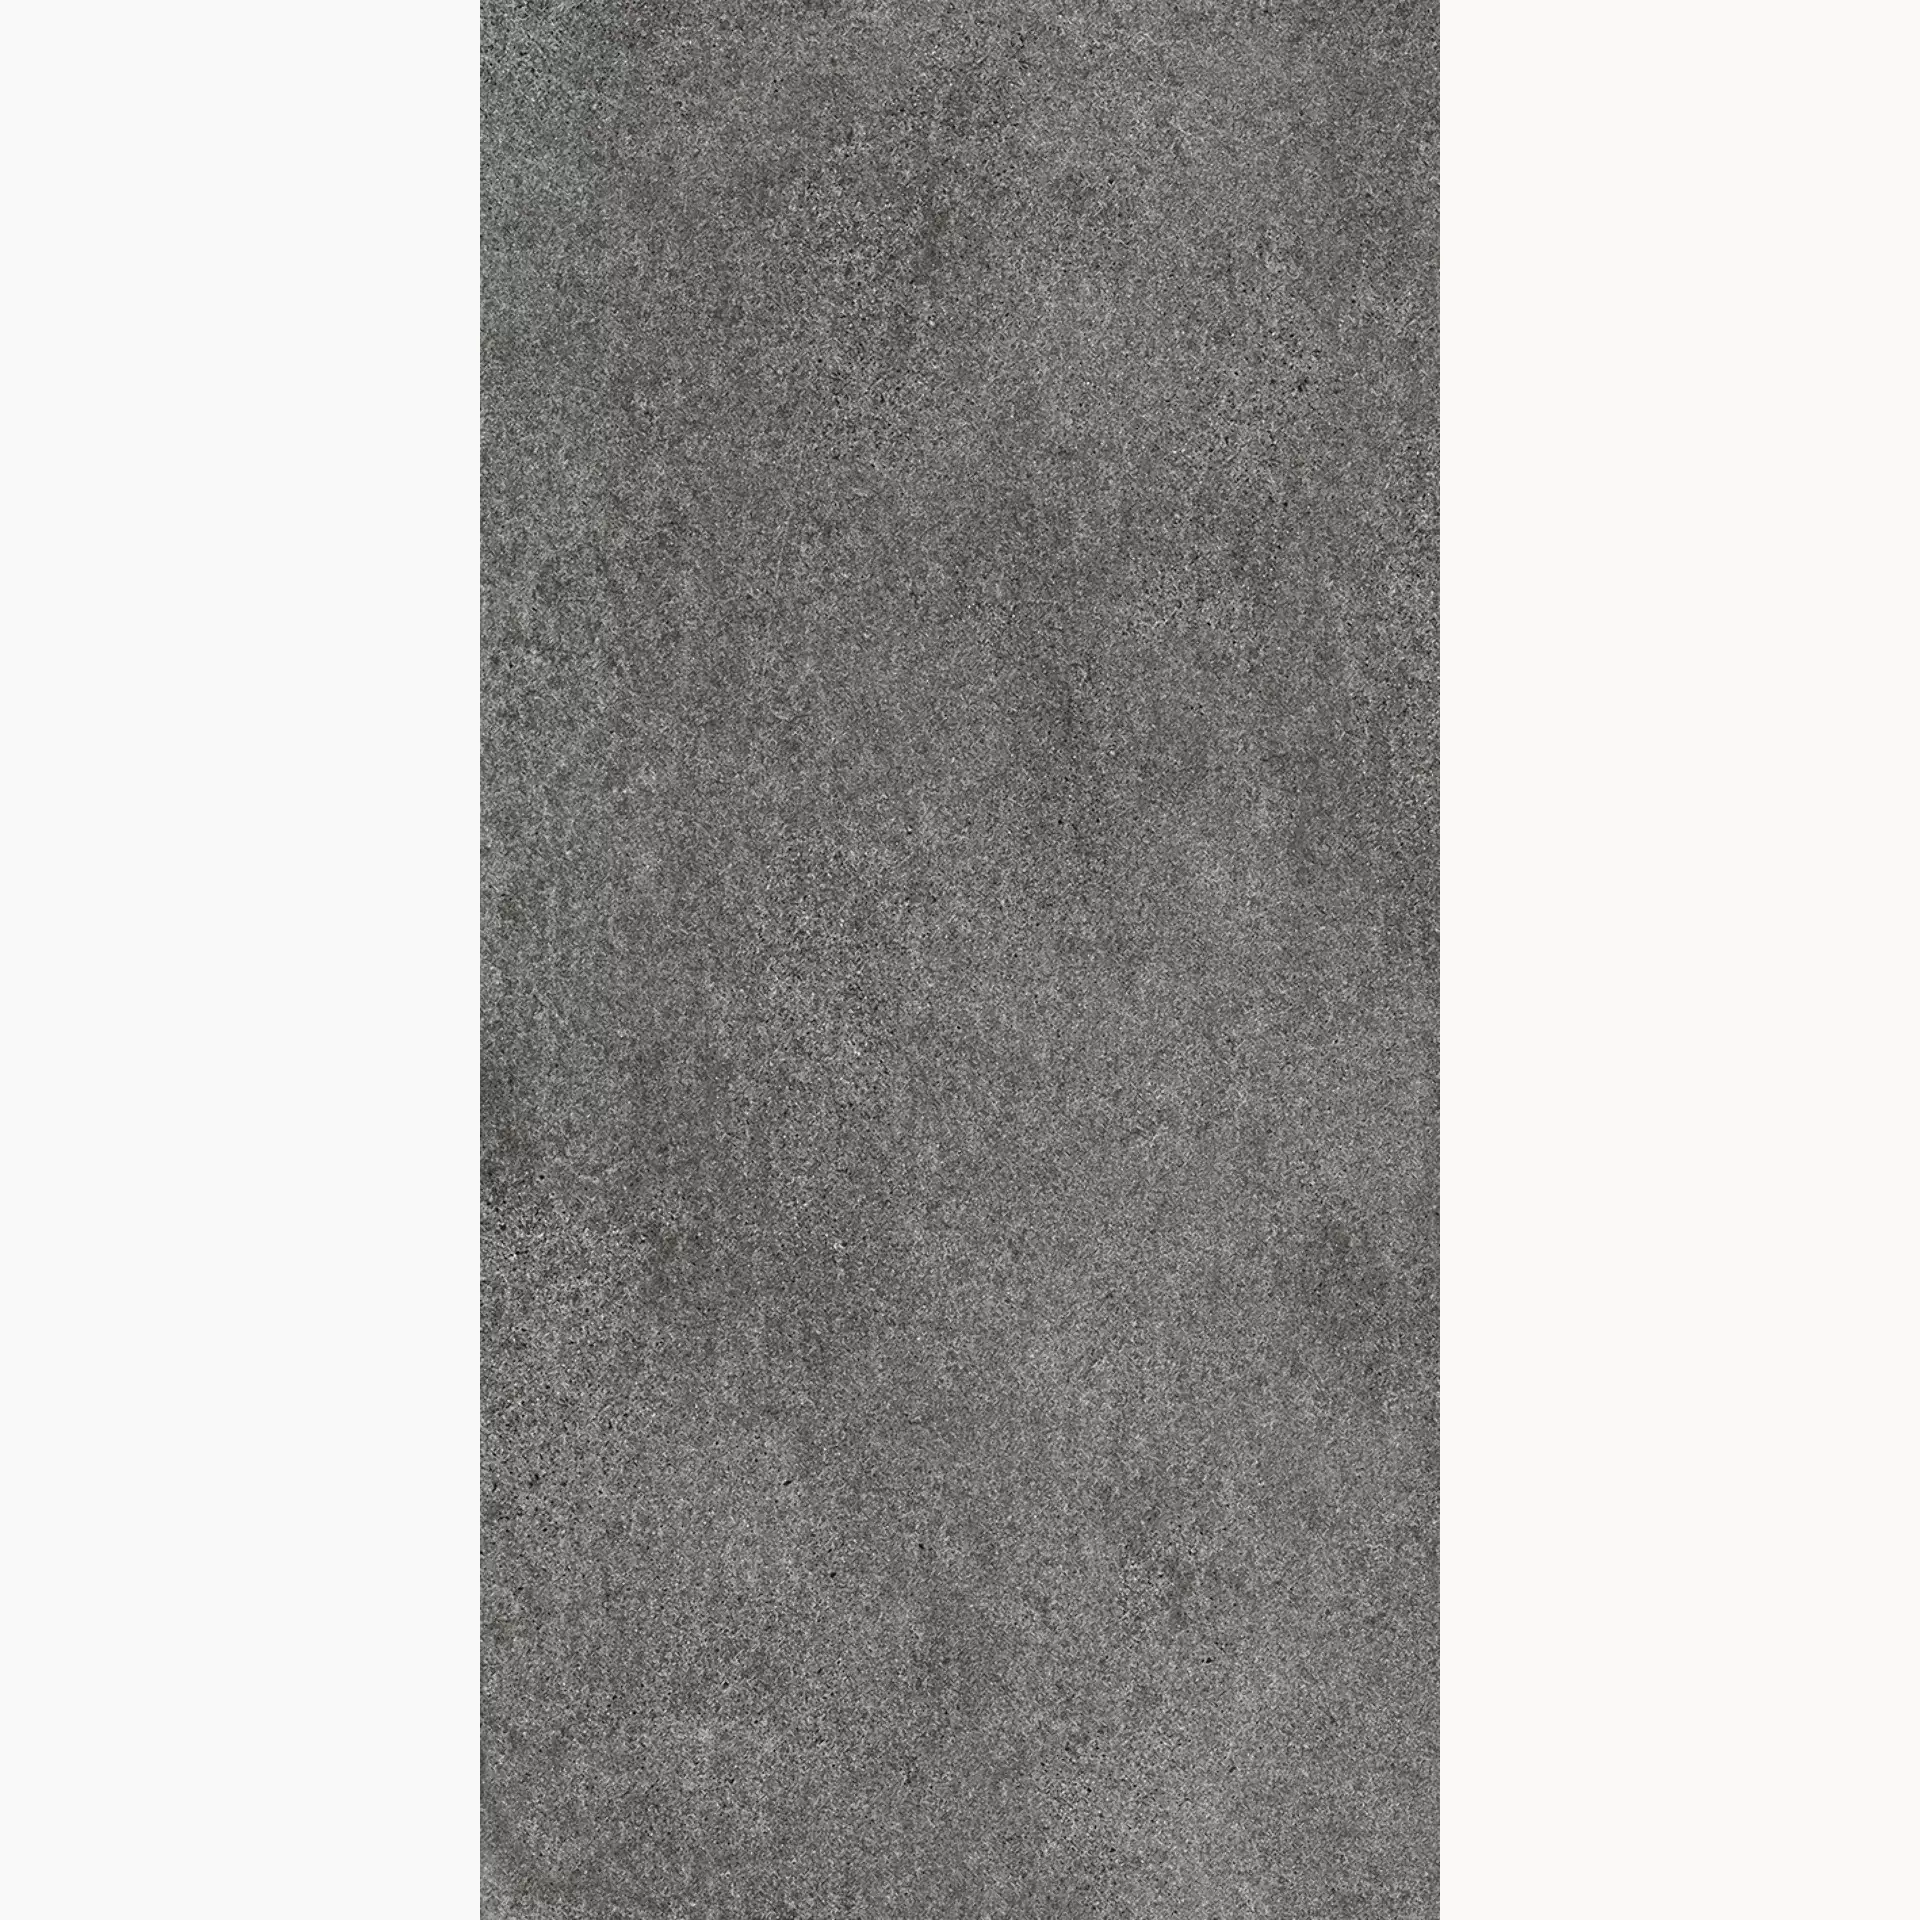 Villeroy & Boch Solid Tones Dark Stone Matt 2737-PS62 60x120cm rectified 10mm